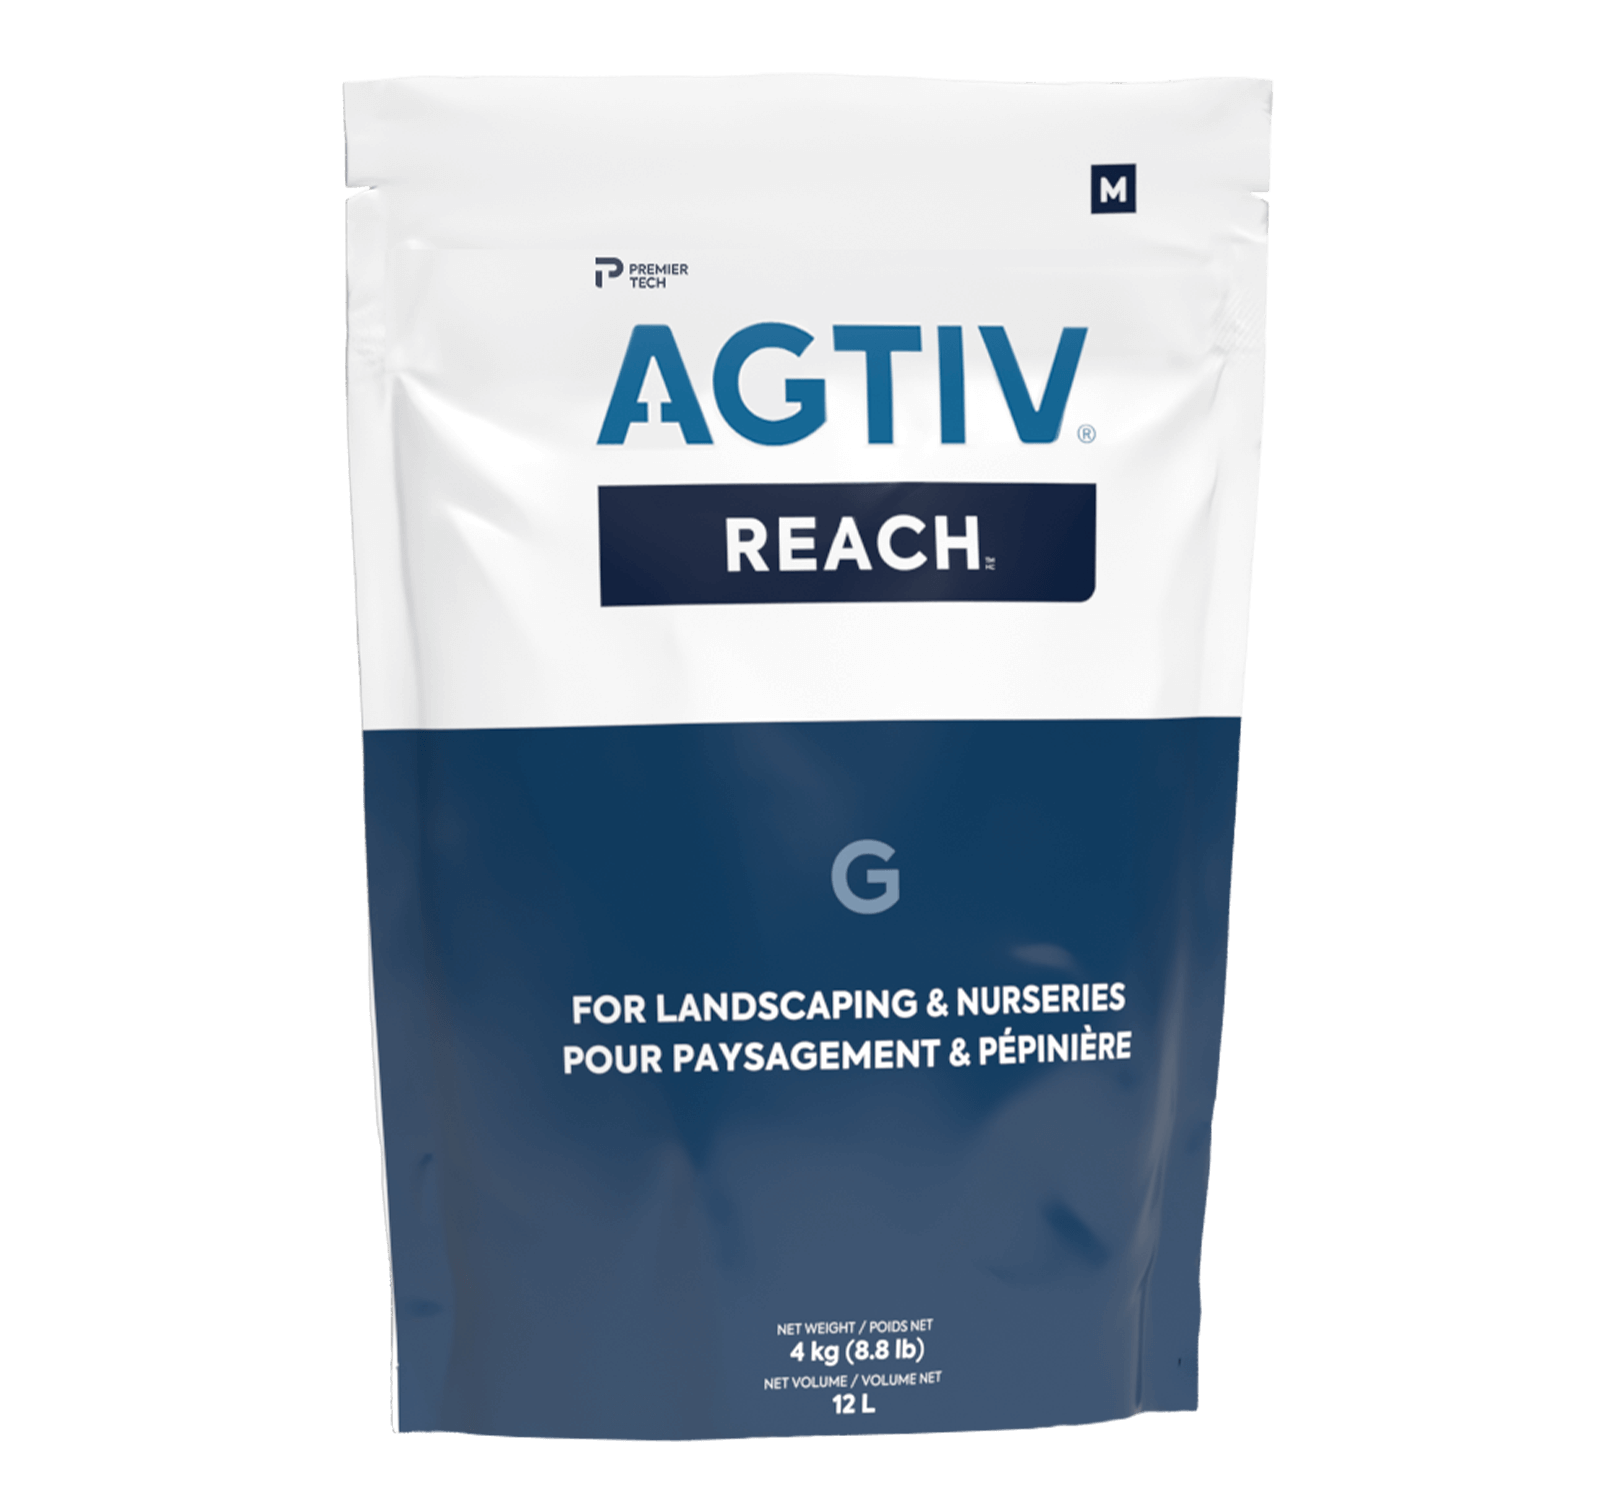 agtiv reach g for landscaping & nurseries 12l